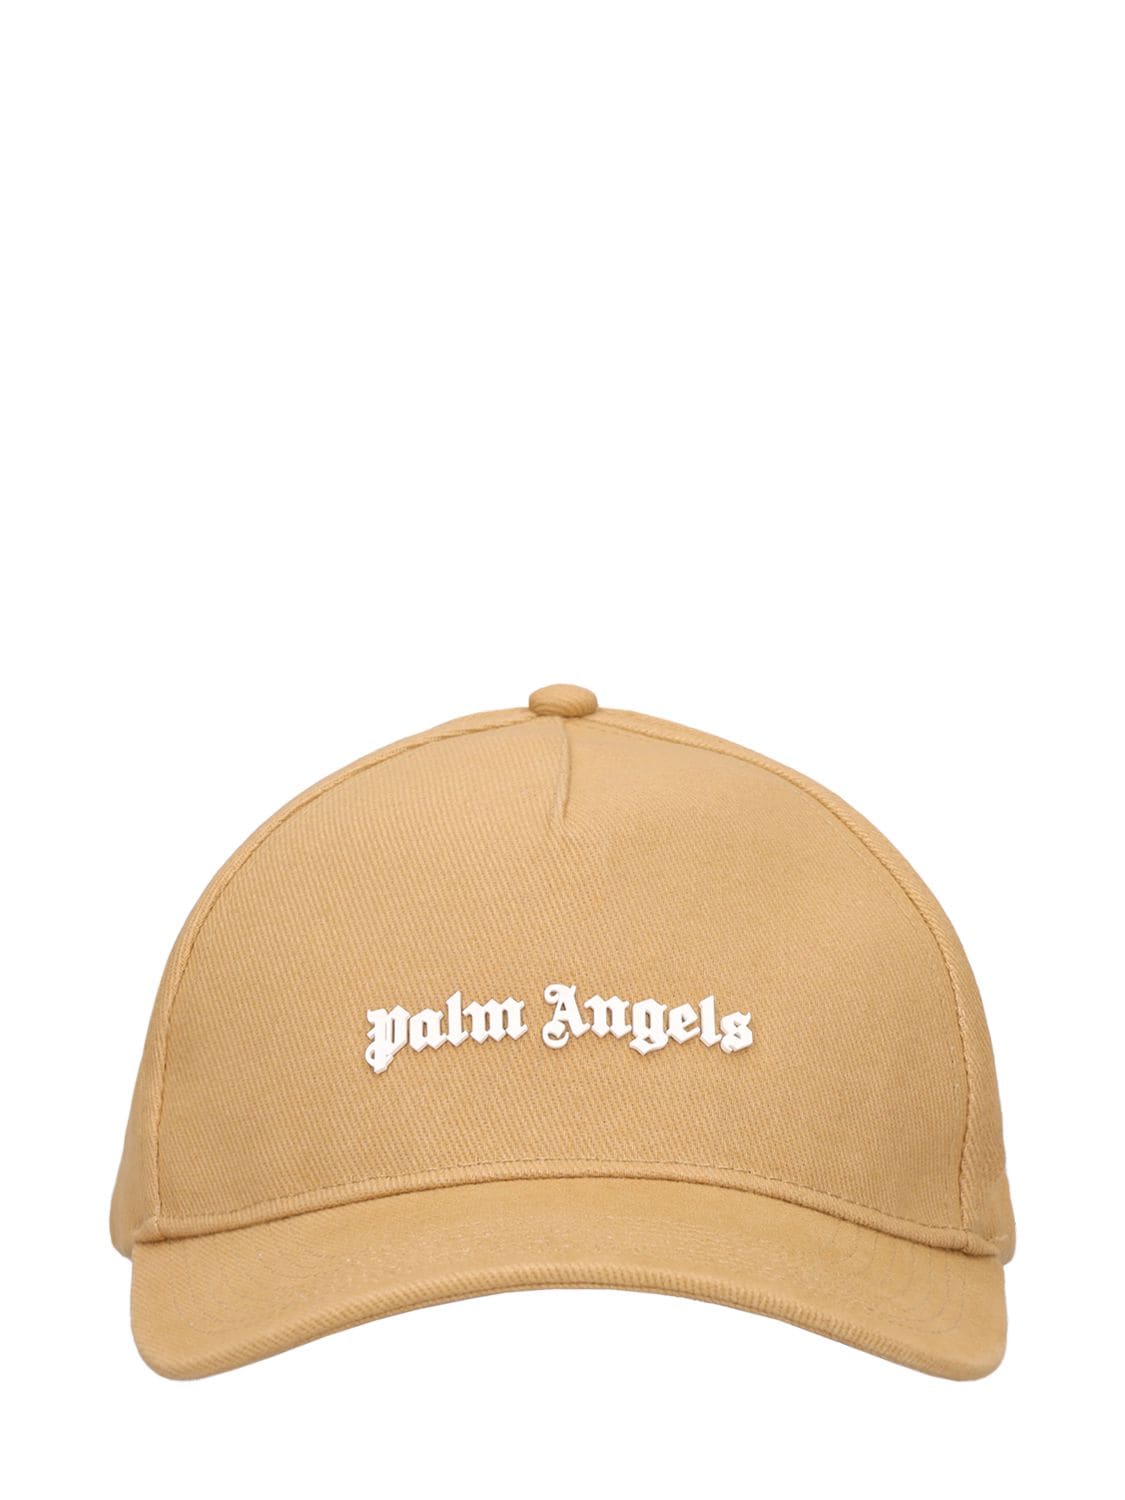 PALM ANGELS LOGO EMBROIDERY COTTON BASEBALL CAP